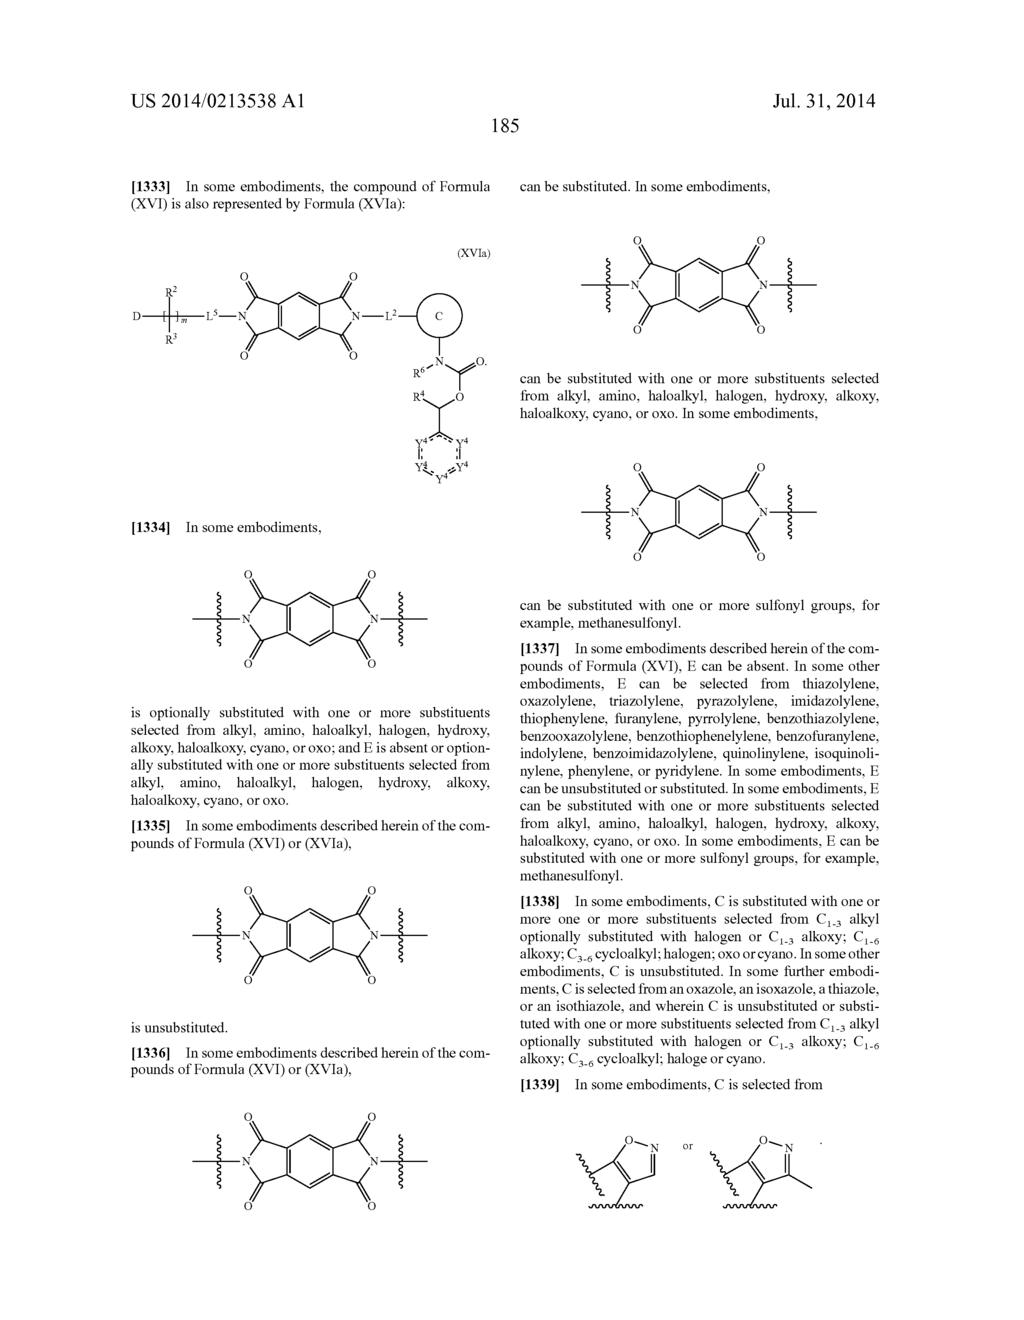 LYSOPHOSPHATIDIC ACID RECEPTOR ANTAGONISTS - diagram, schematic, and image 186